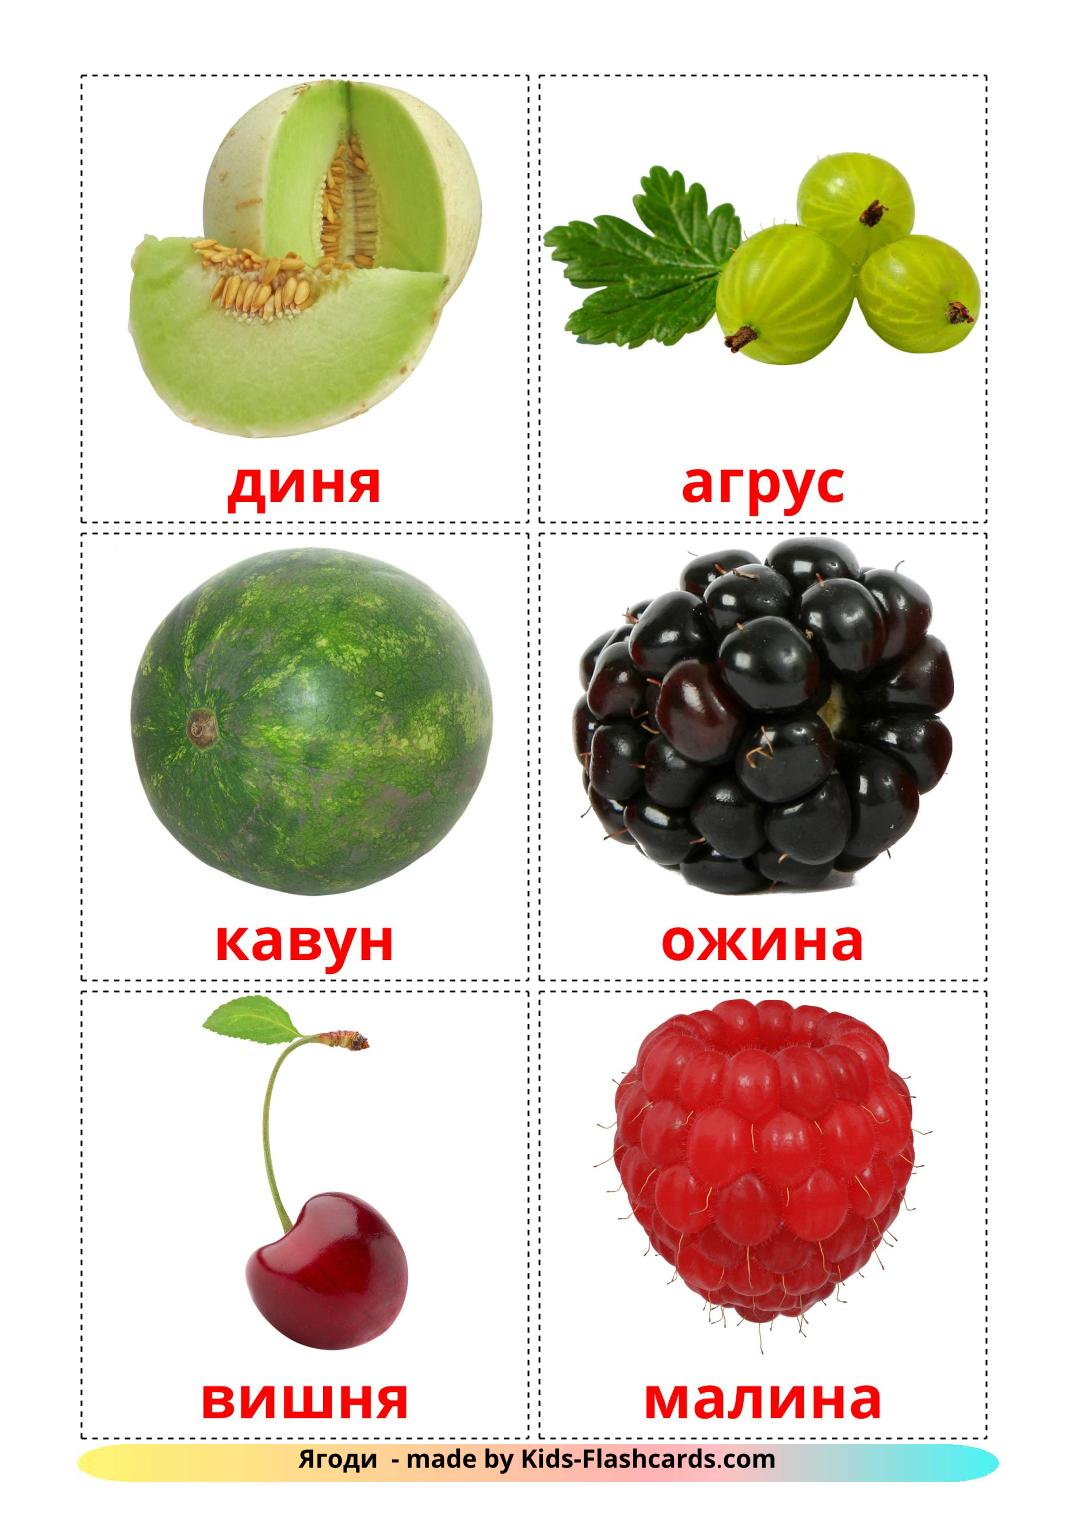 Berries - 11 Free Printable ukrainian Flashcards 